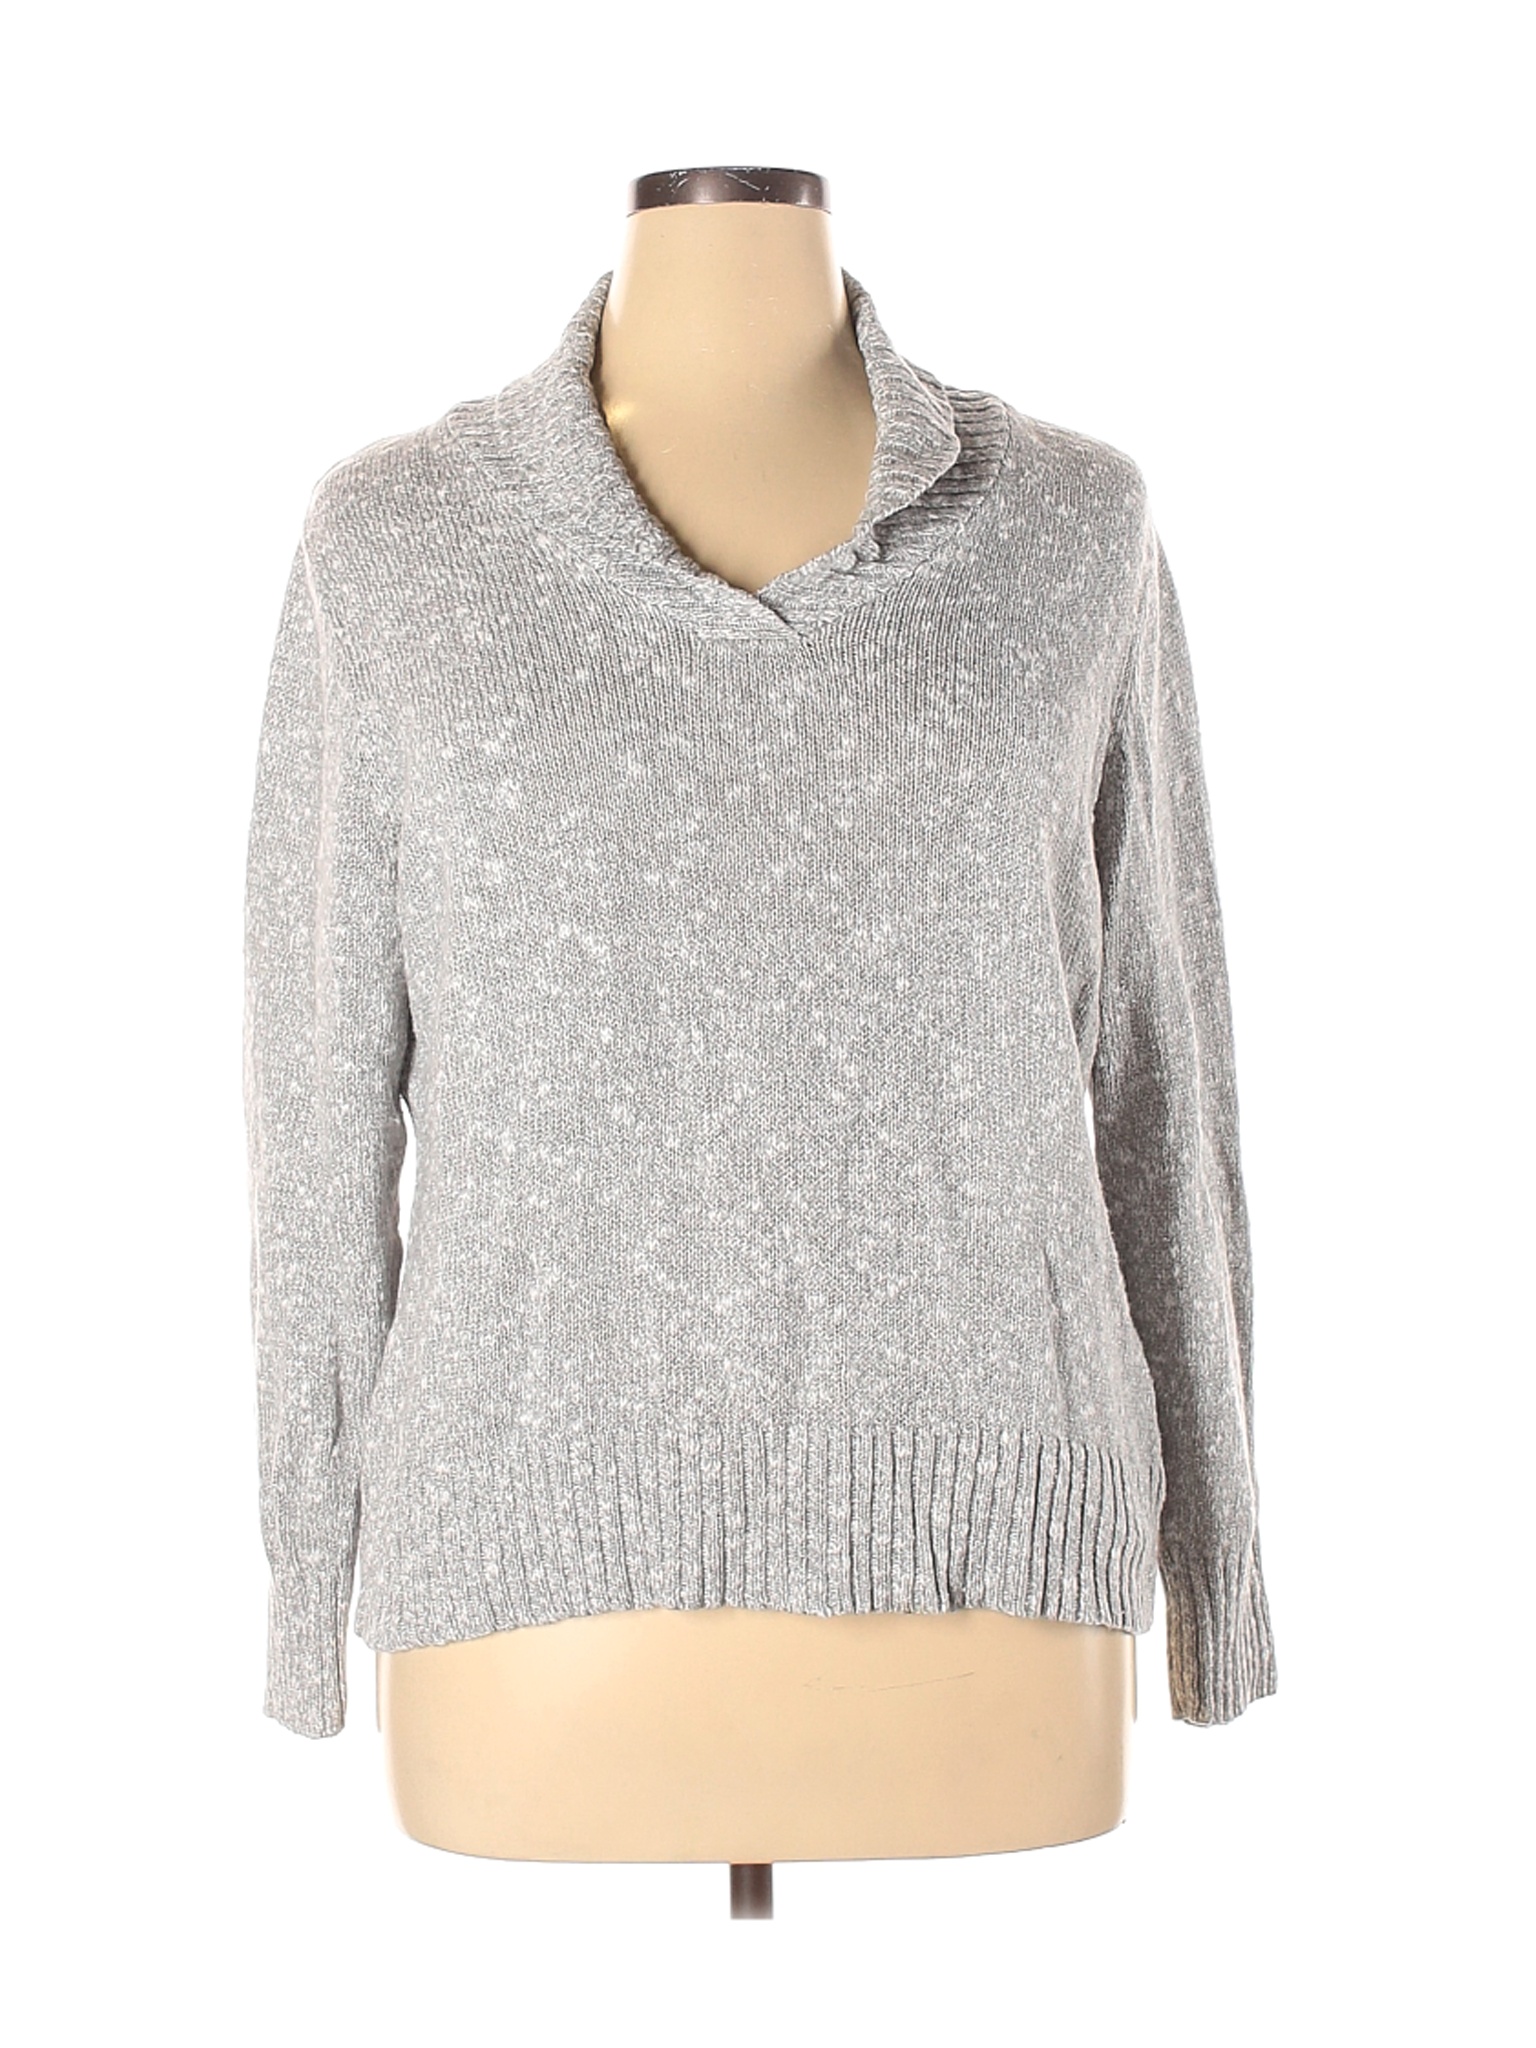 Sag Harbor Women Gray Pullover Sweater 1X Plus | eBay